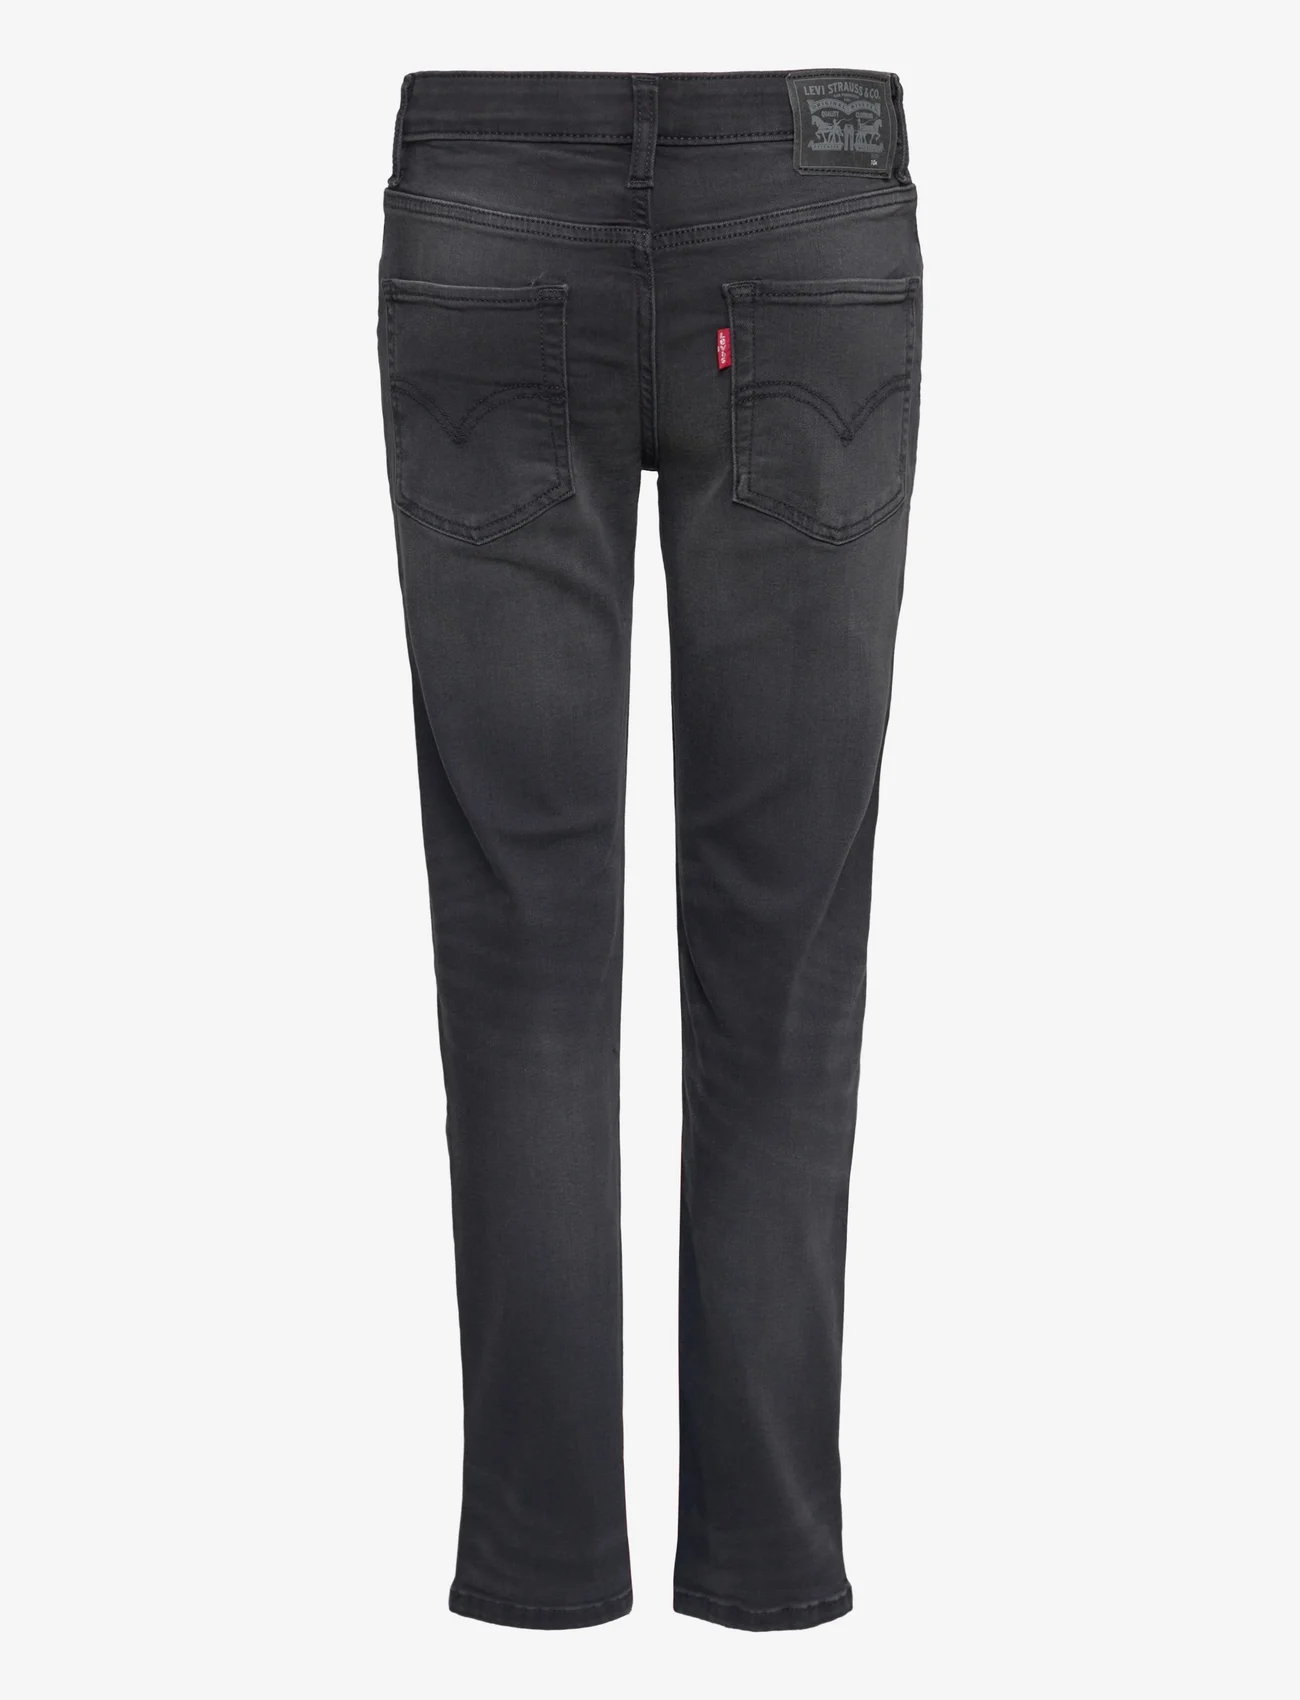 Levi's - Levi's® 511™ Slim Fit Eco Performance Jeans - regular jeans - grey - 1